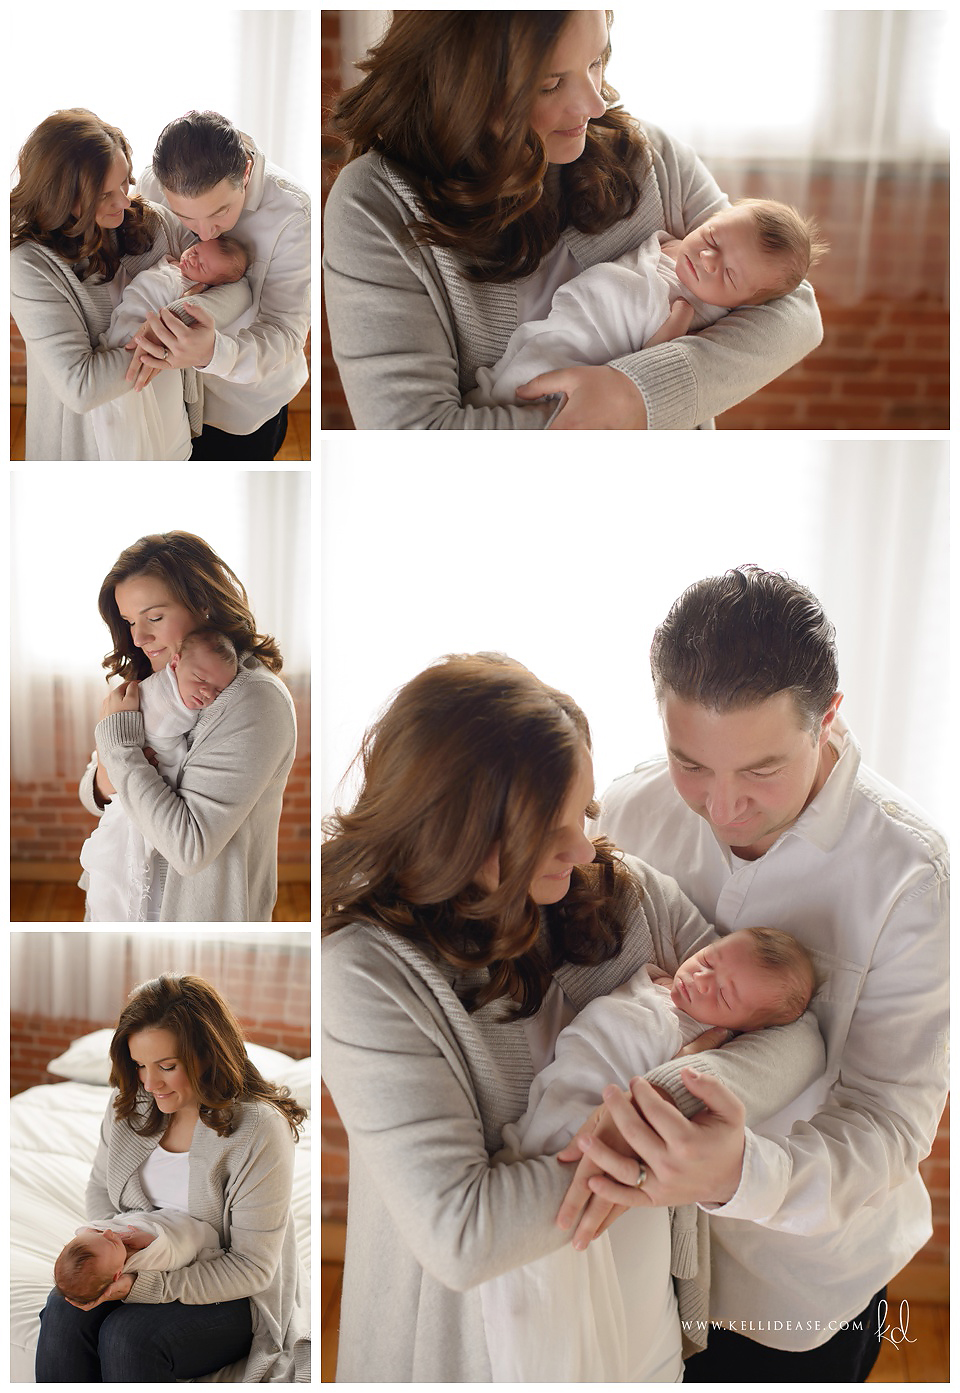 Simple and natural professional newborn photos in soft neutral tones | Simsbury | Canton | Avon | West Hartford | Top CT newborn photographer Kelli Dease | www.kellidease.com